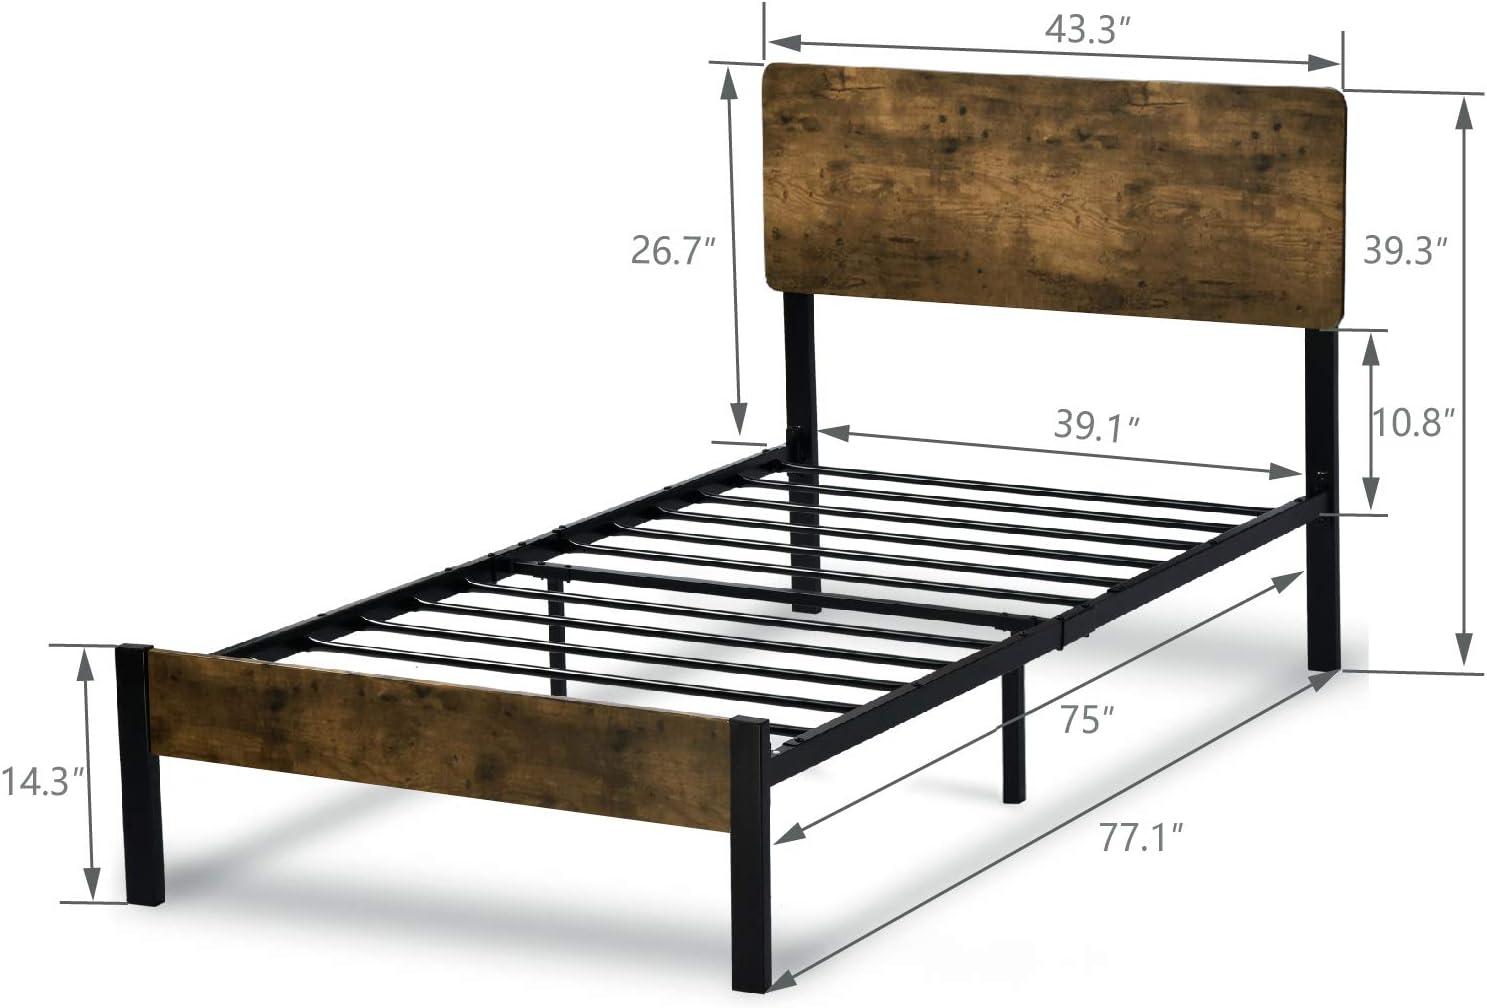 Allewie Twin Size Platform Bed Frame, Twin Size Bed Frame Slats